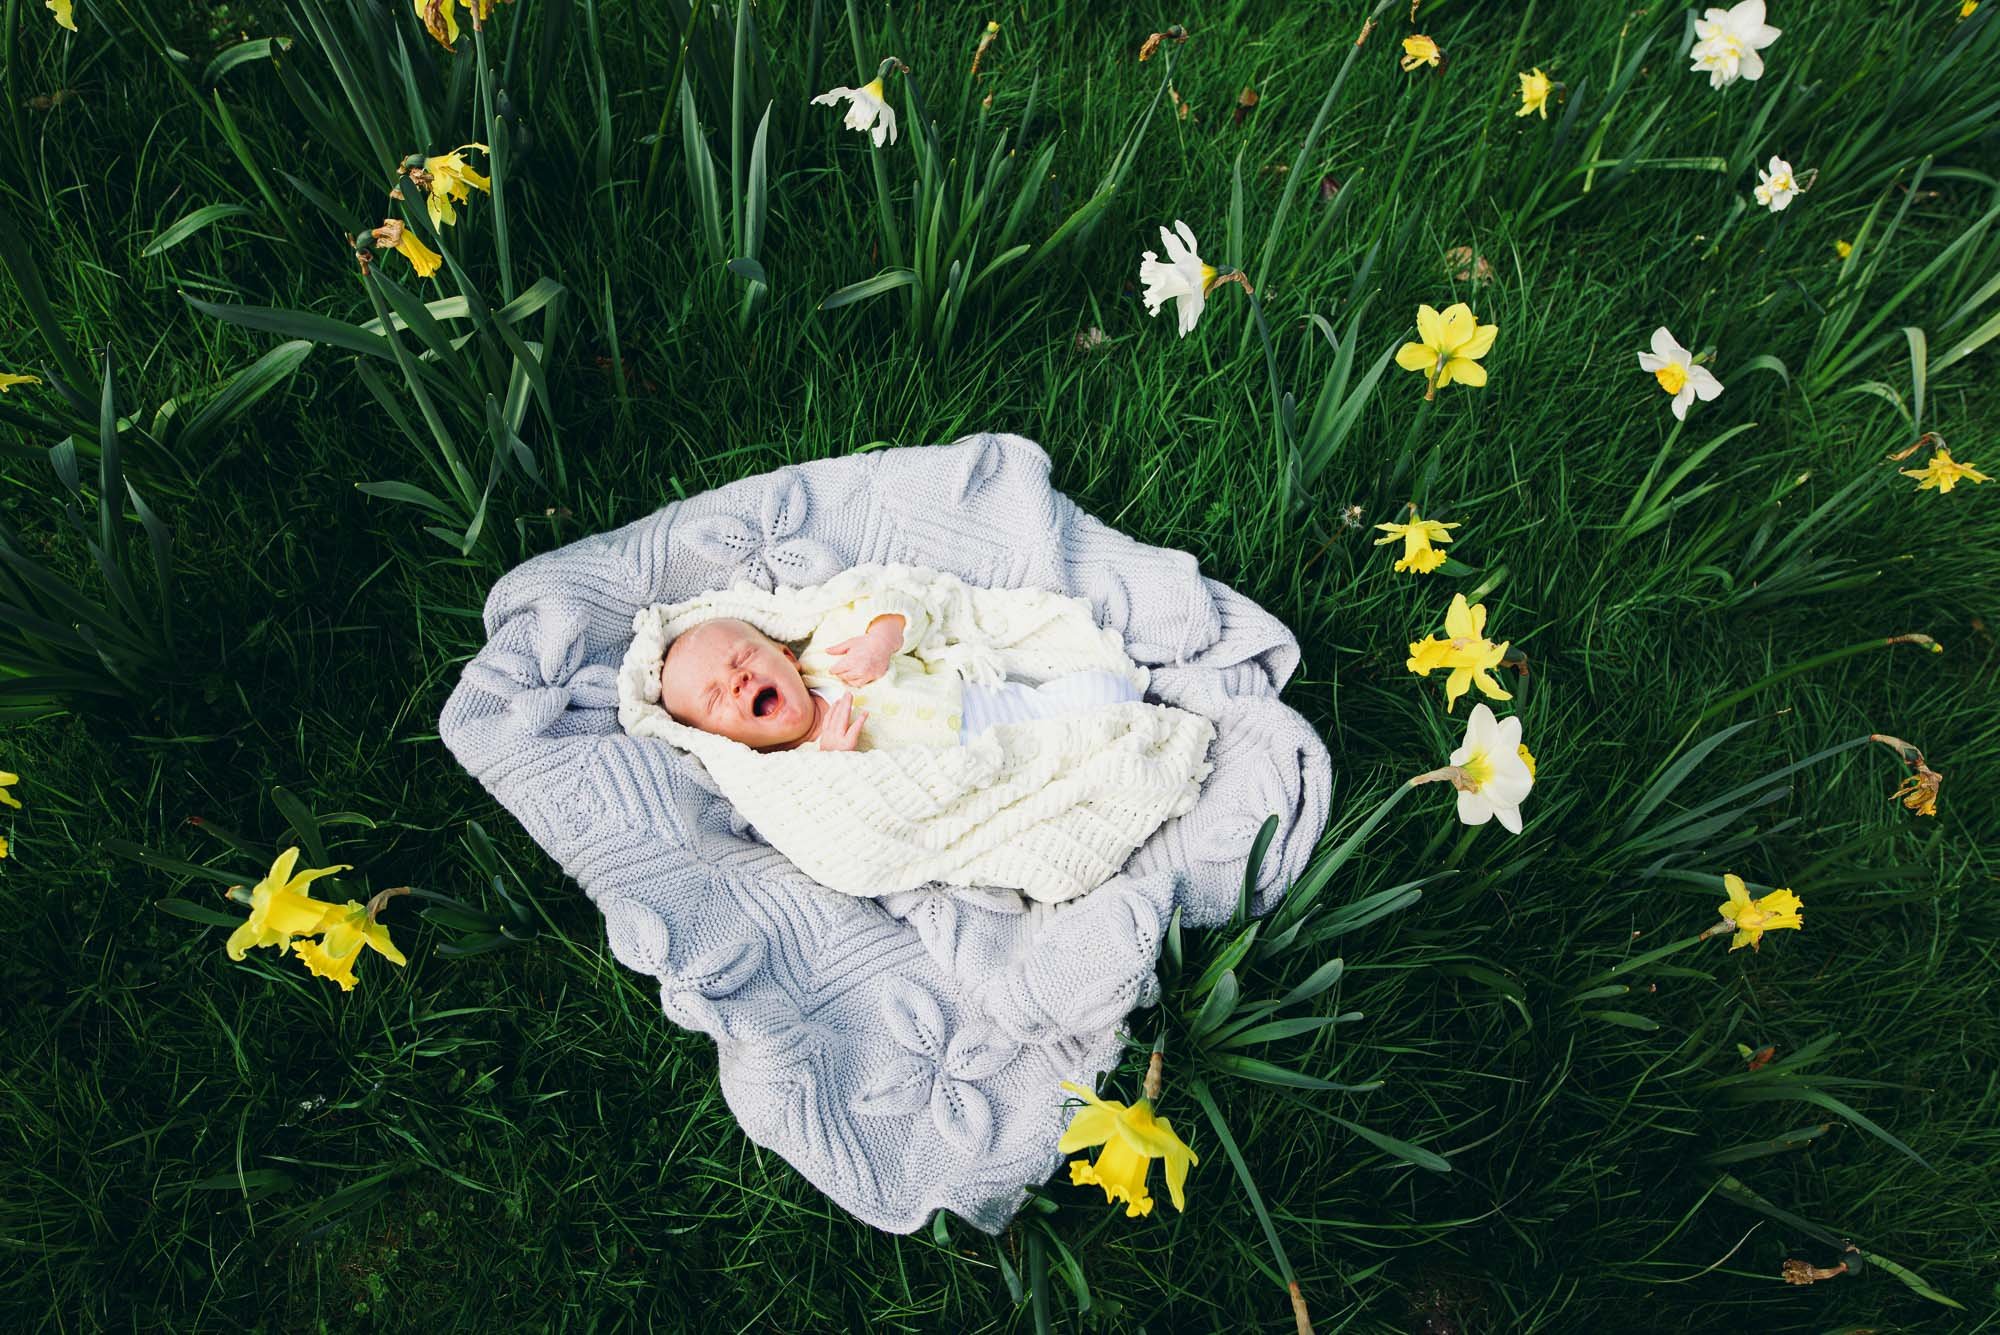 newborn-baby-portrait-spring-grass-daffodils-sussex-hassocks-newborn-photography-unposed-natural-documentary.jpg